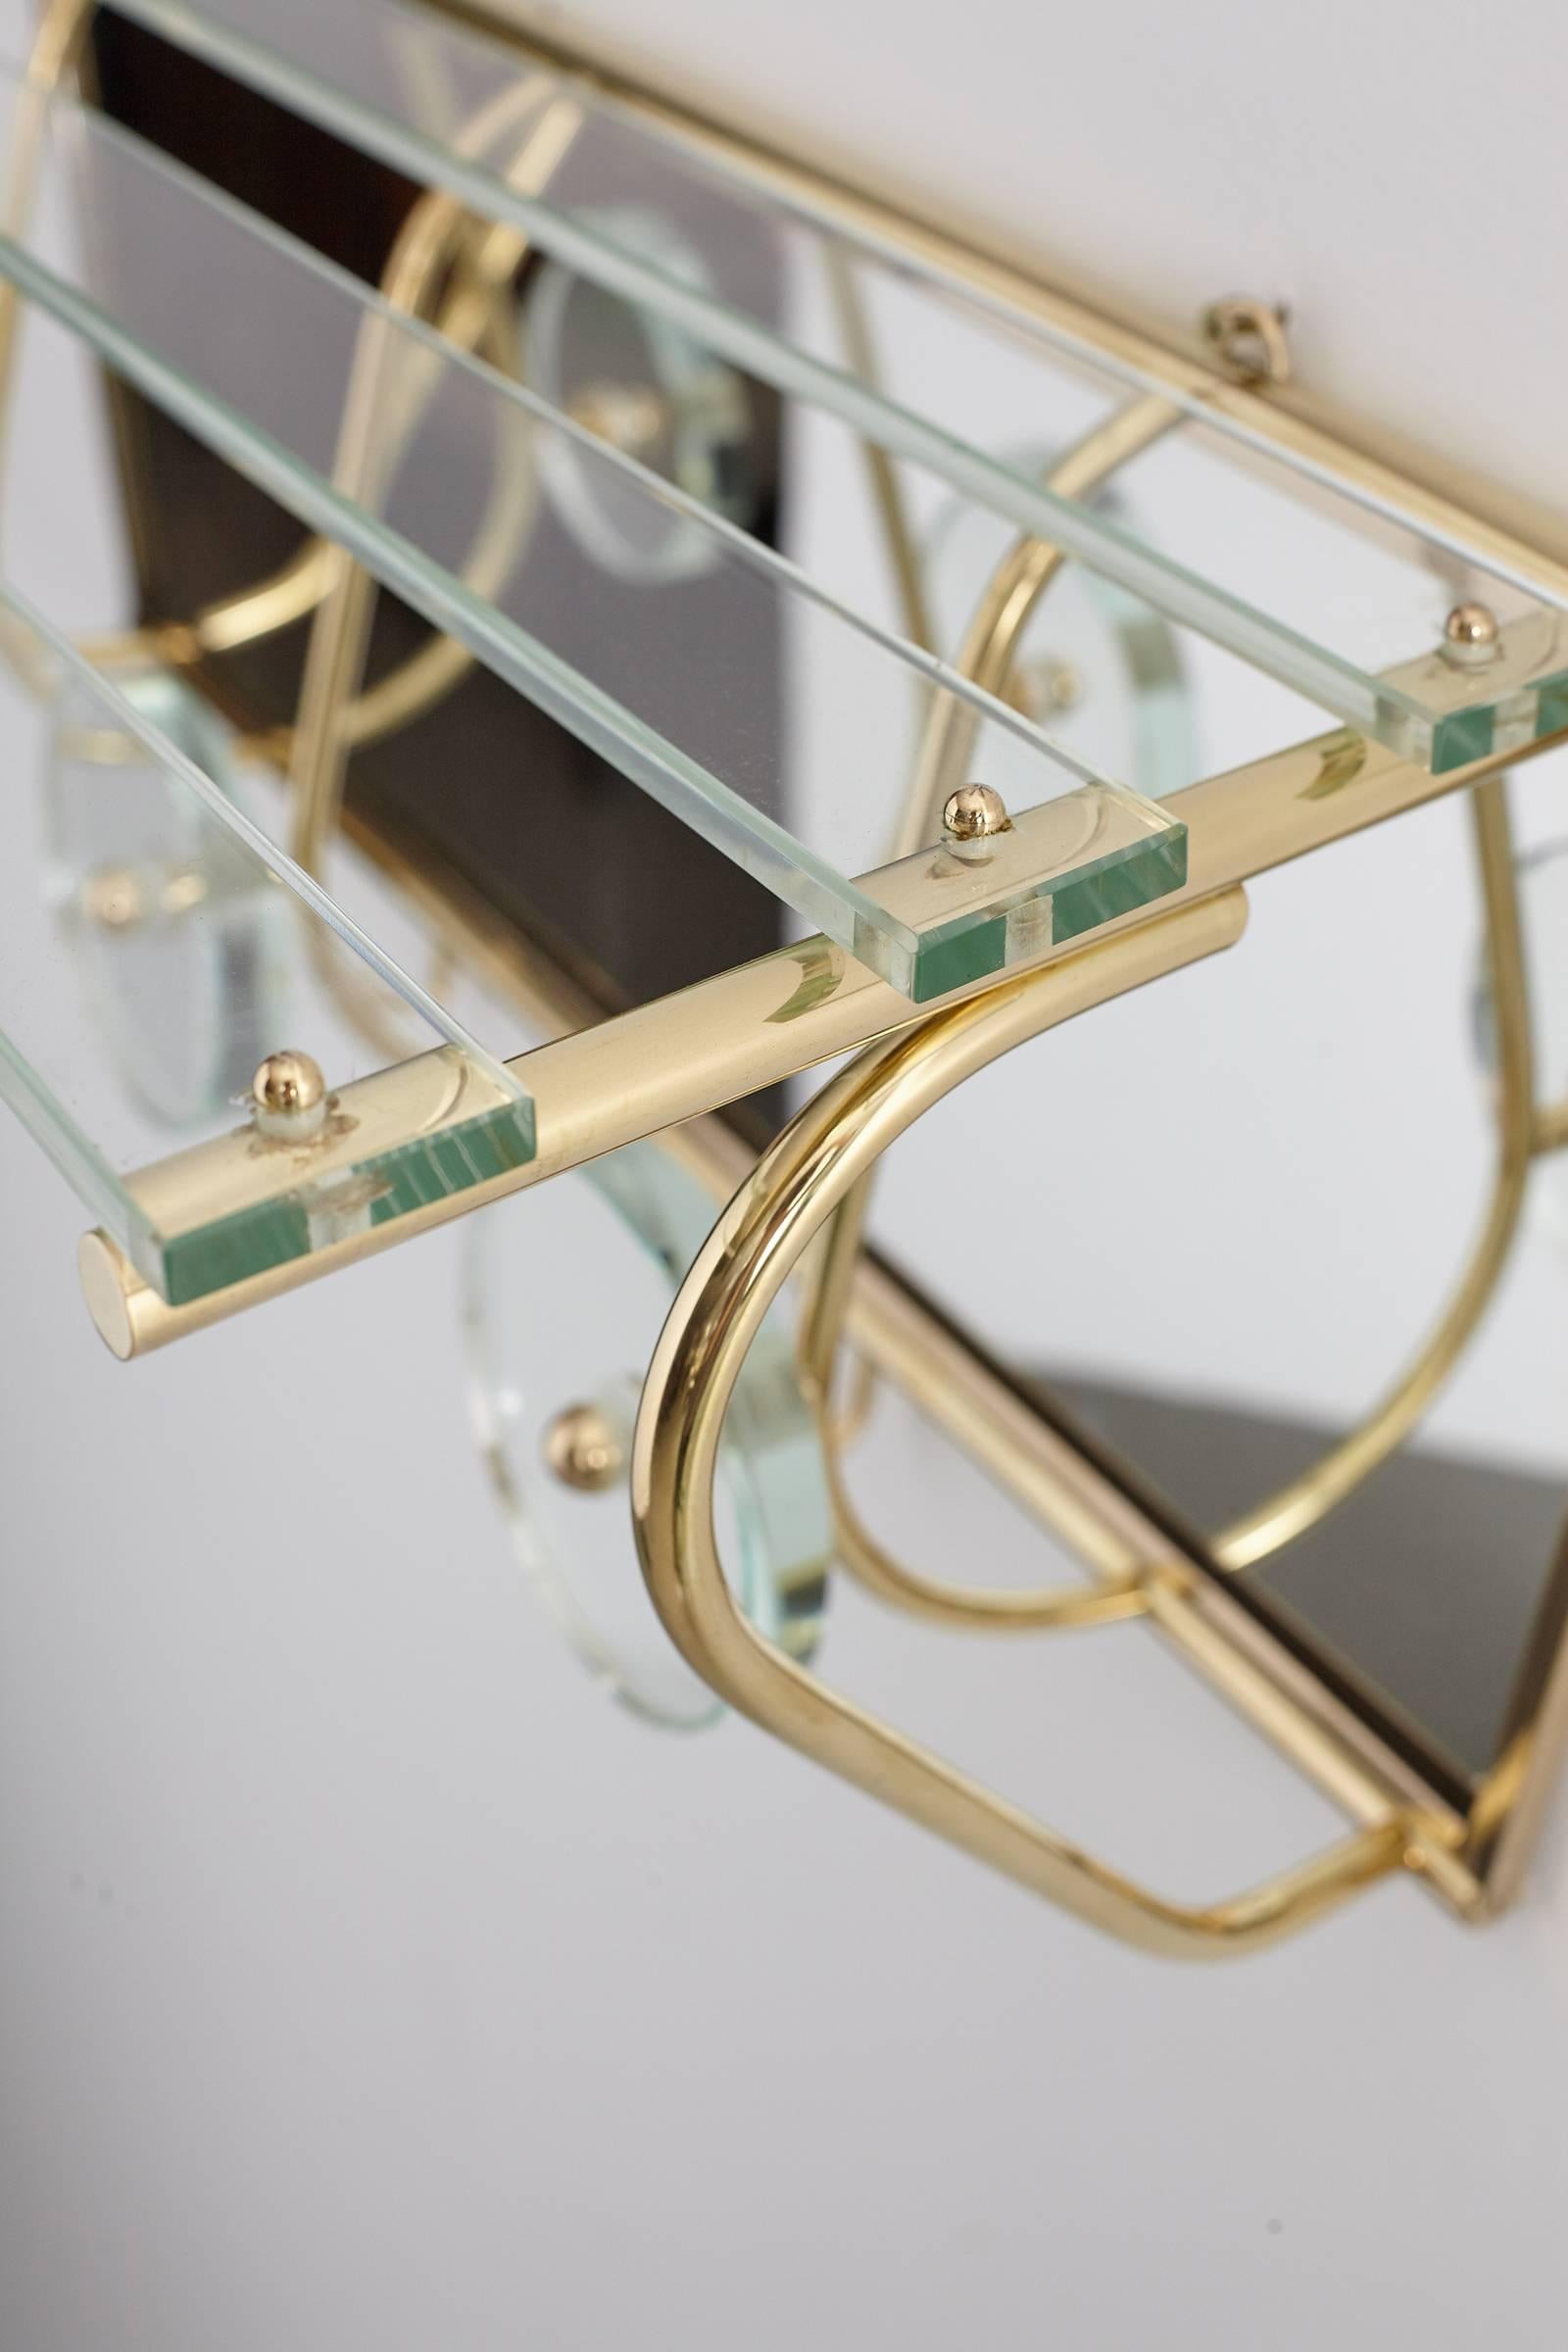 20th Century Italian Fontana Arte Style Glass and Brass Coat Rack